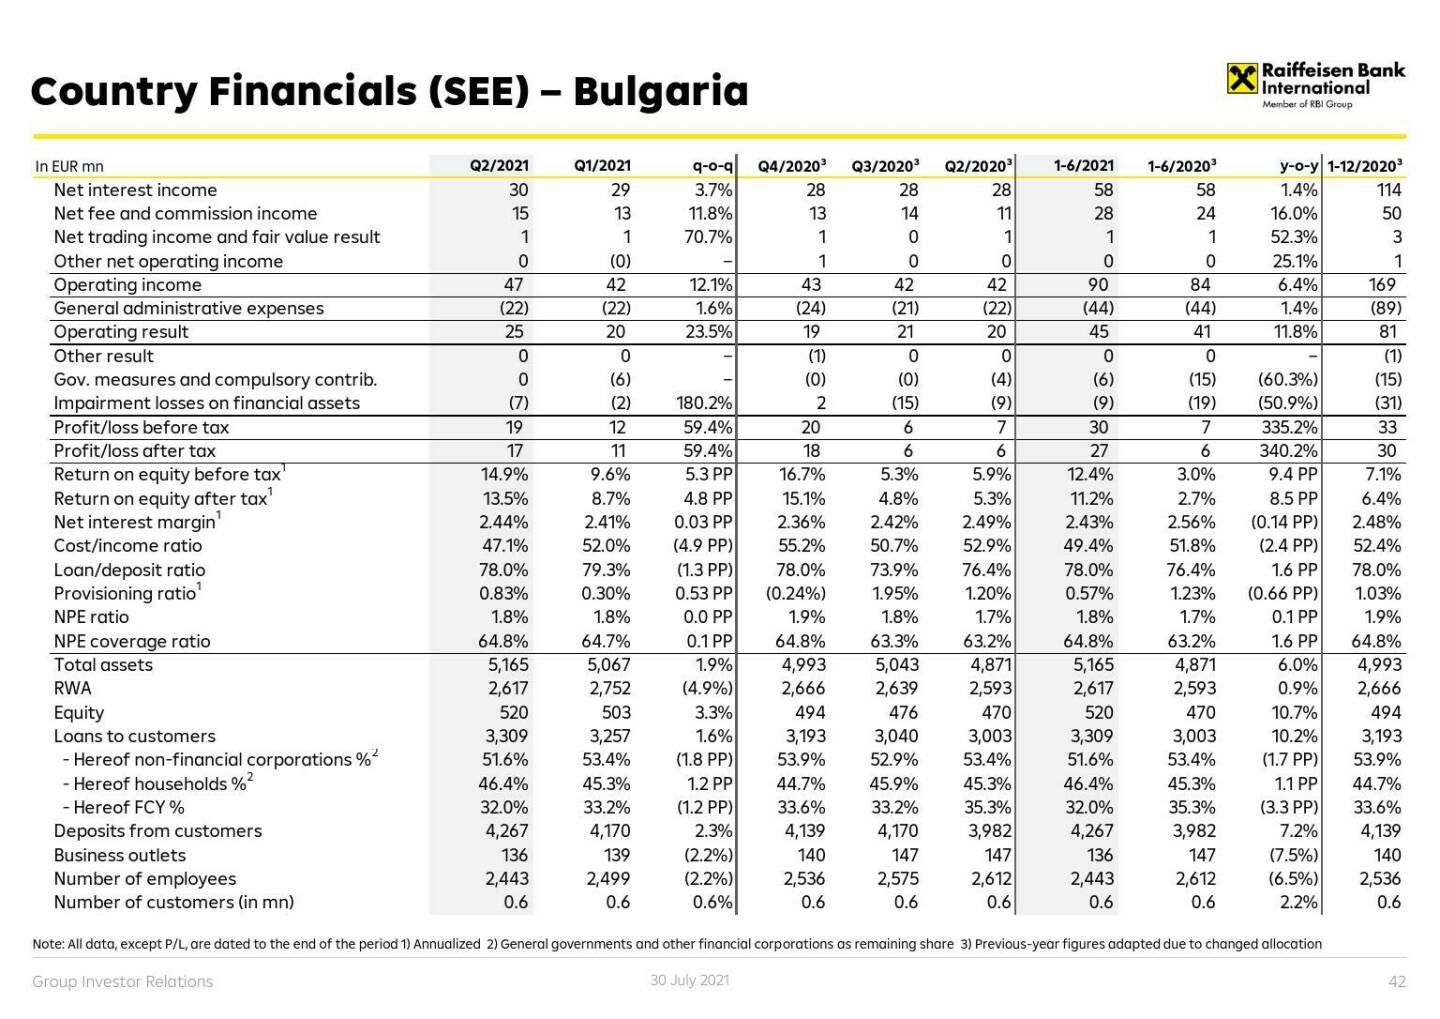 RBI - Country financials (CE) - Bulgaria